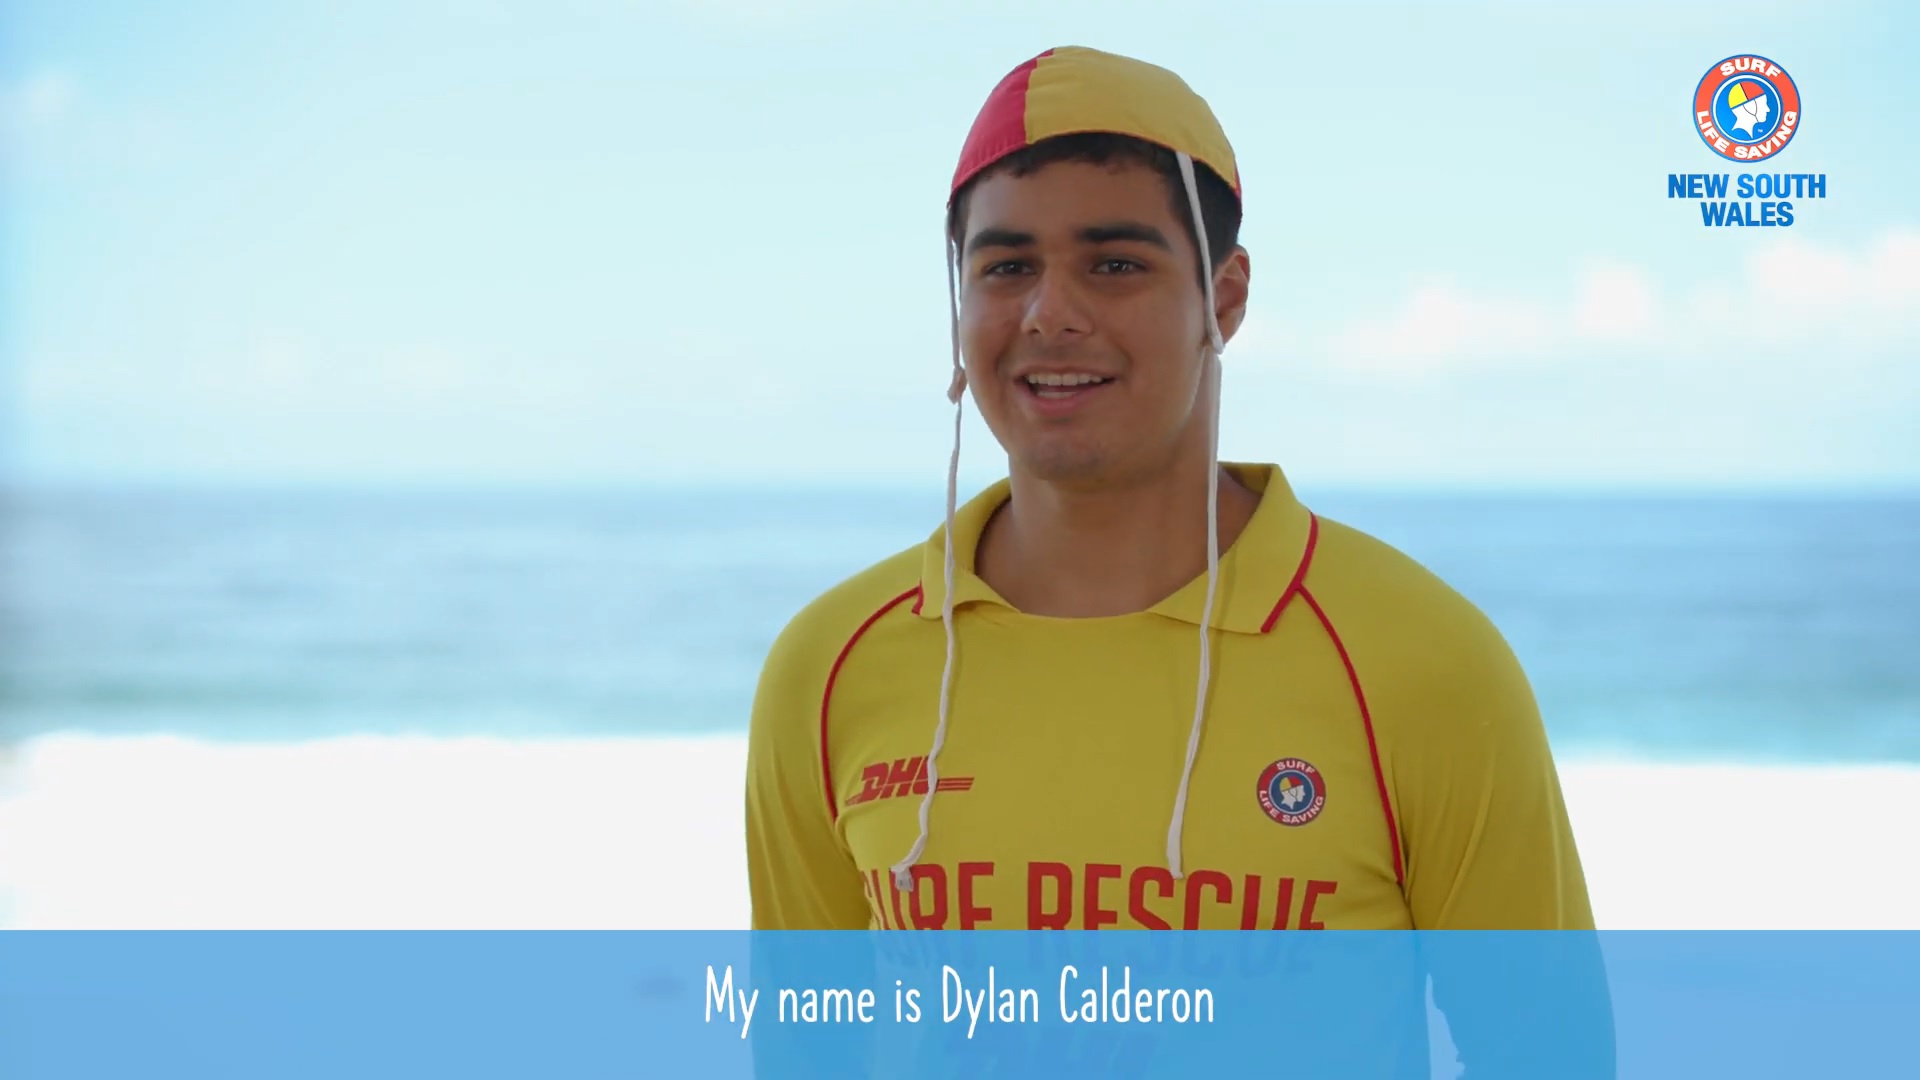 Meet A Lifesaver - Dylan Calderon